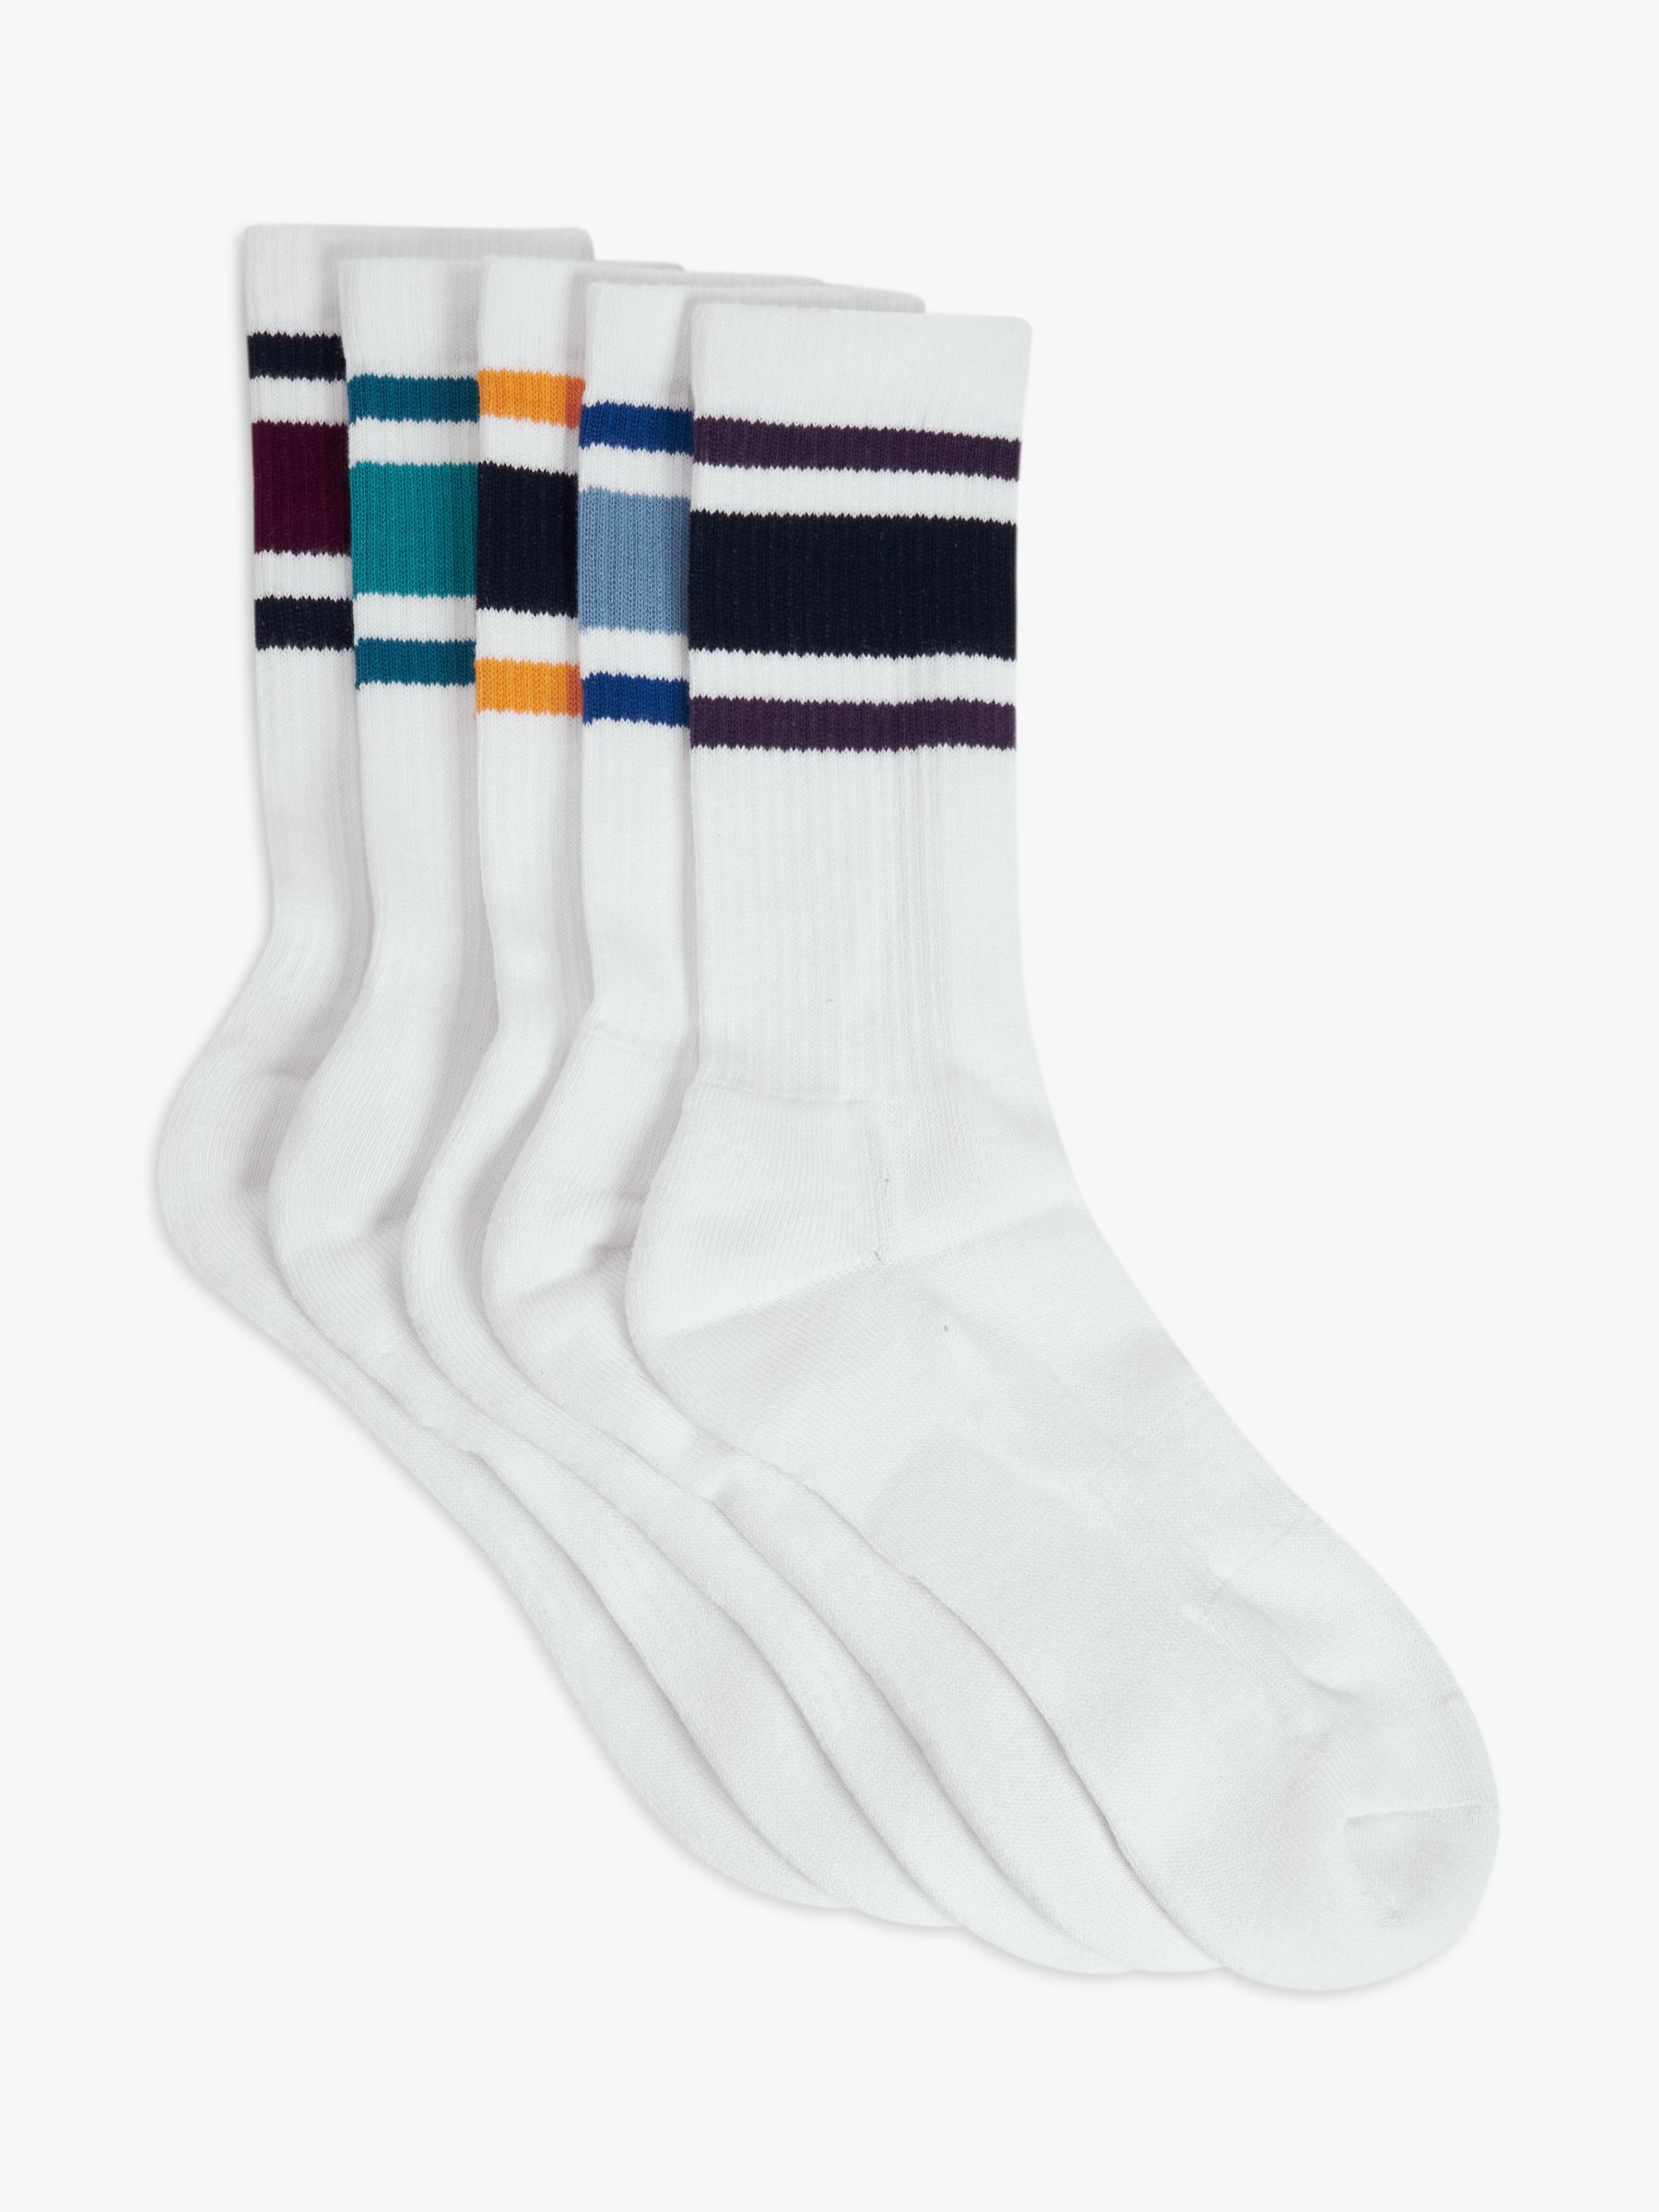 Men's White Striped Cotton Tube Socks by Soxfords